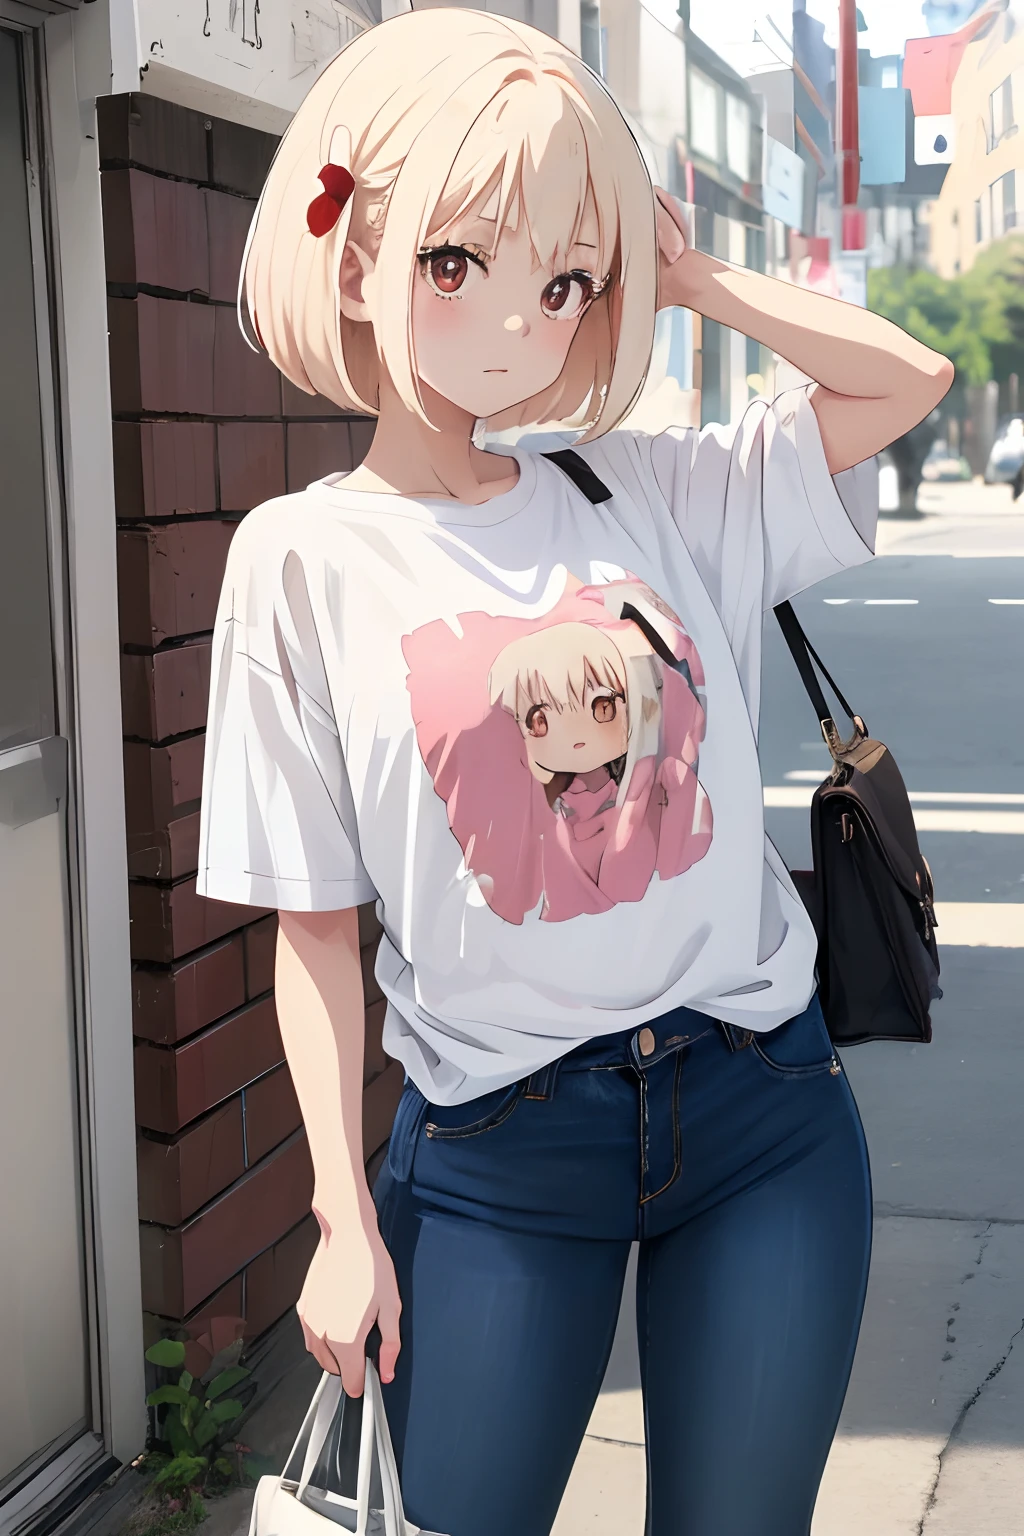 Anime girl in white shirt ant shirt jeans